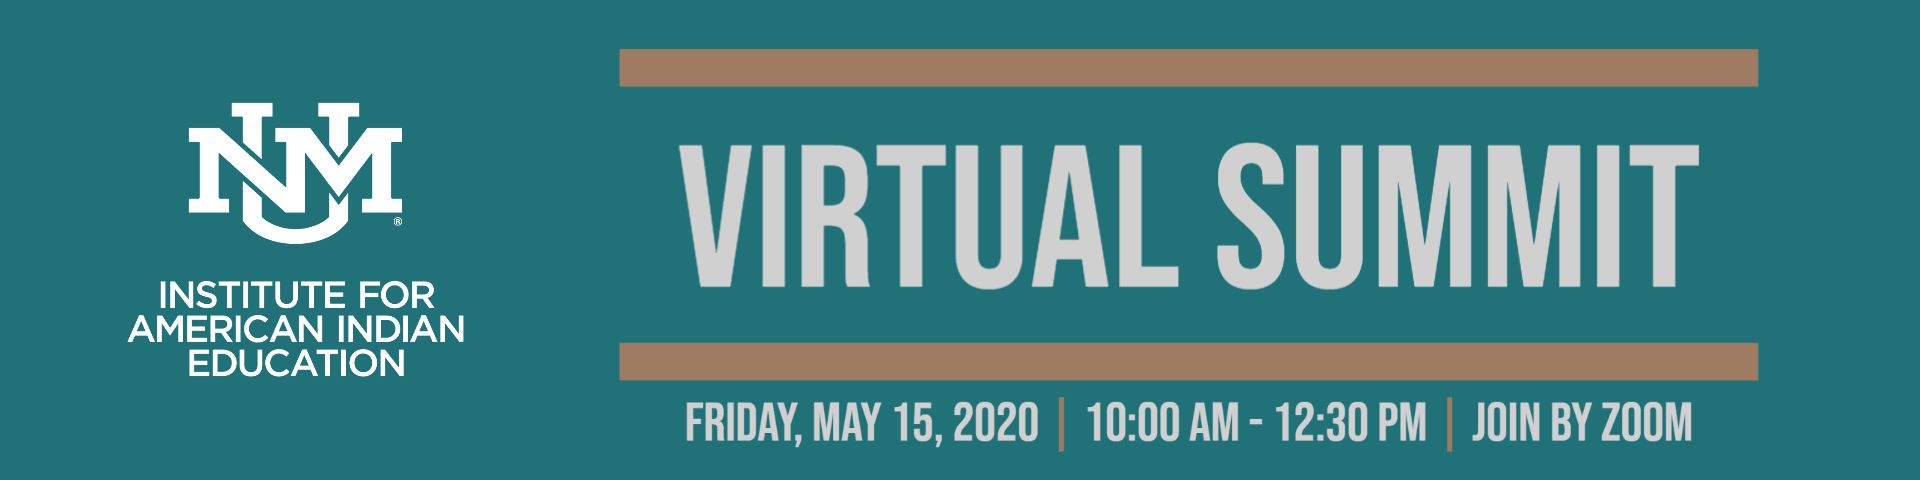 Virtual Summit Banner